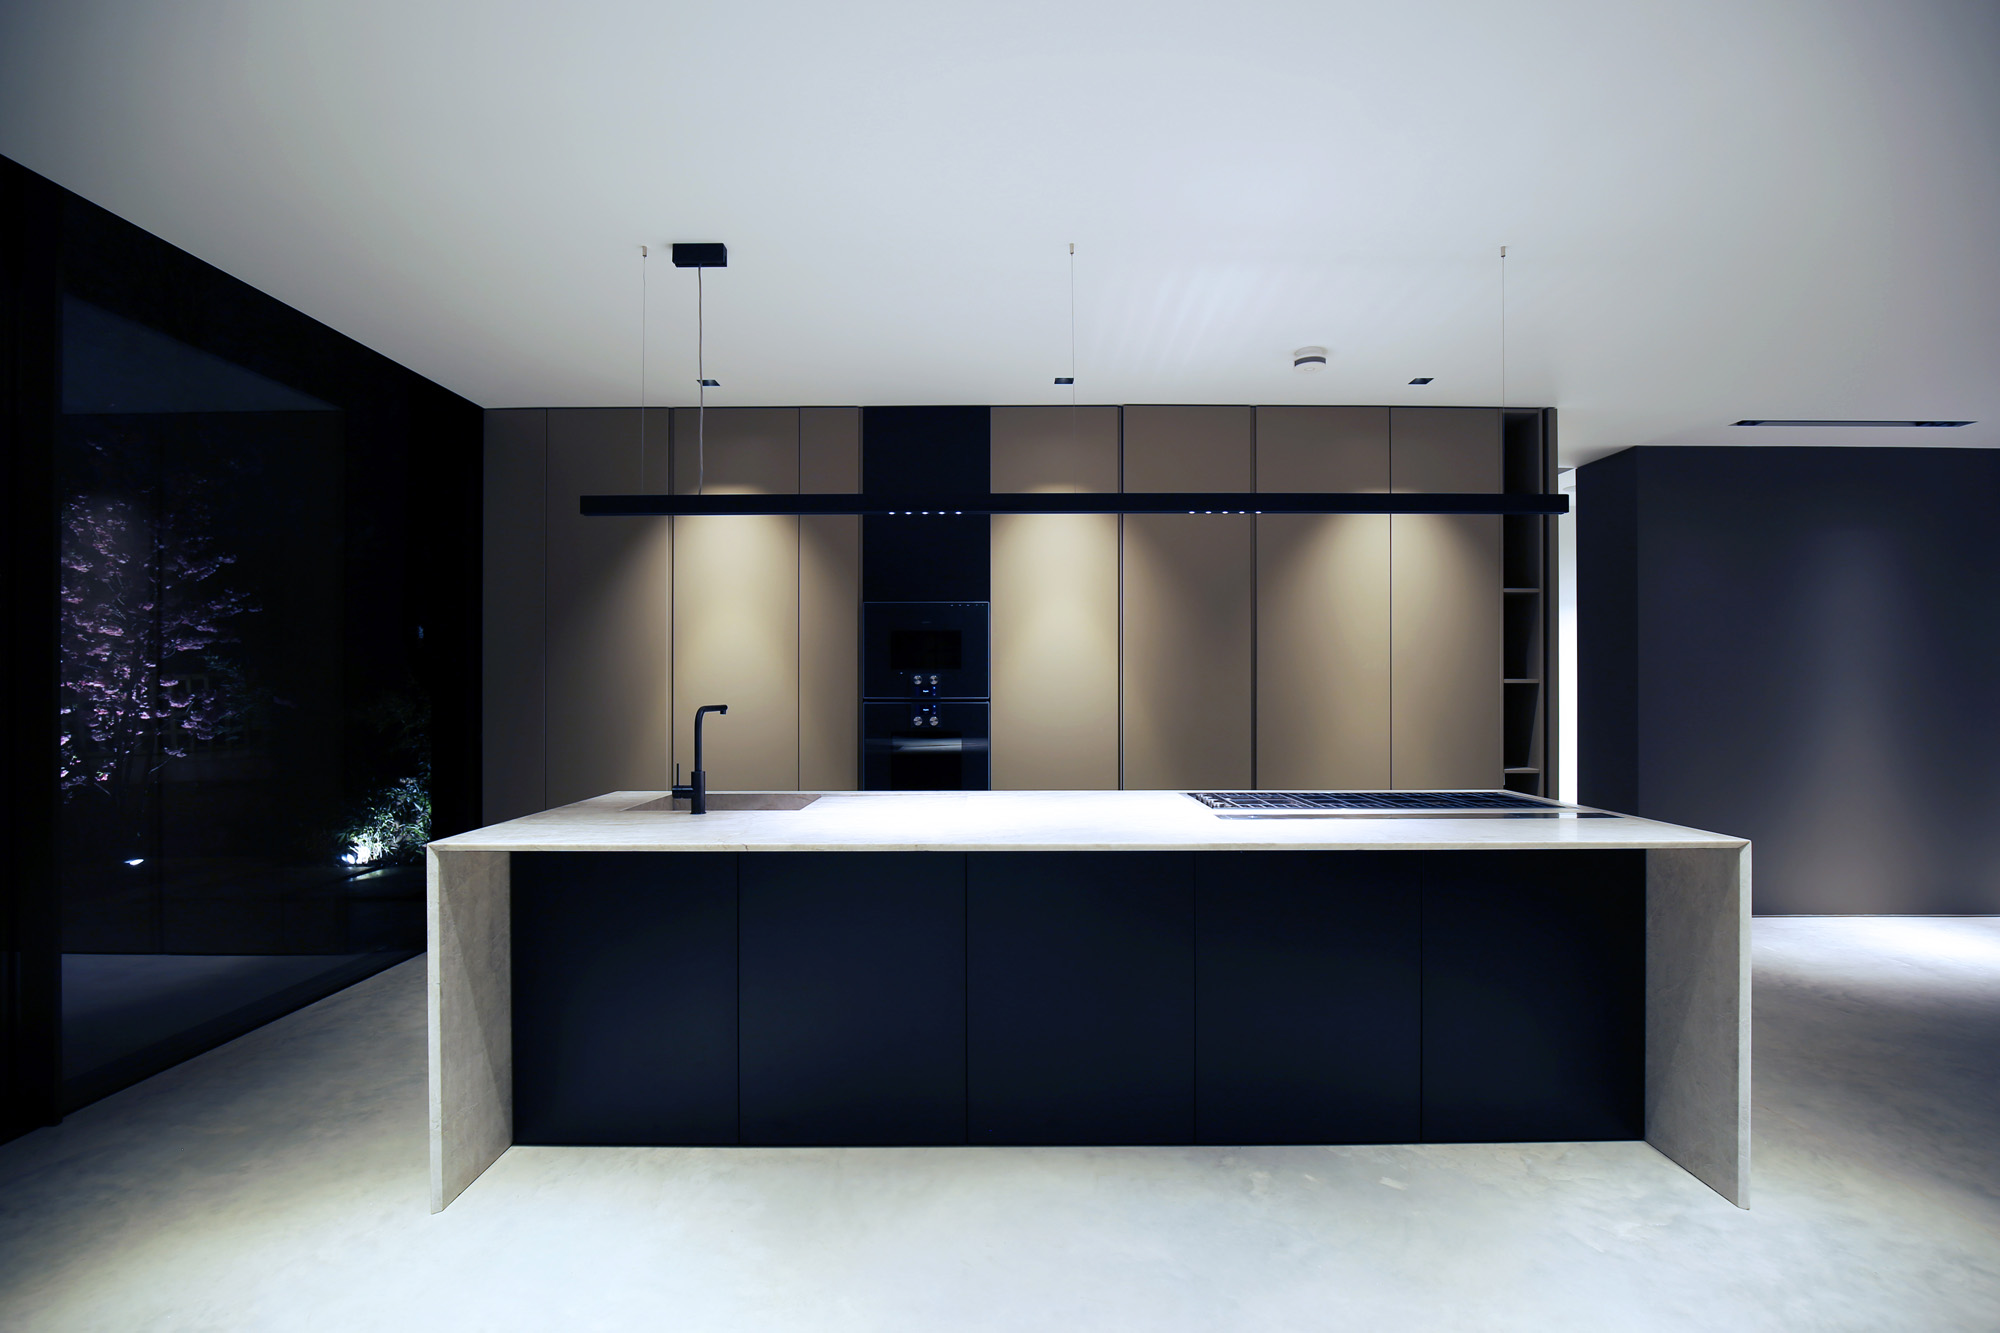 Kitchen by LBMV Architects - luxury and modern architecture design studio in London